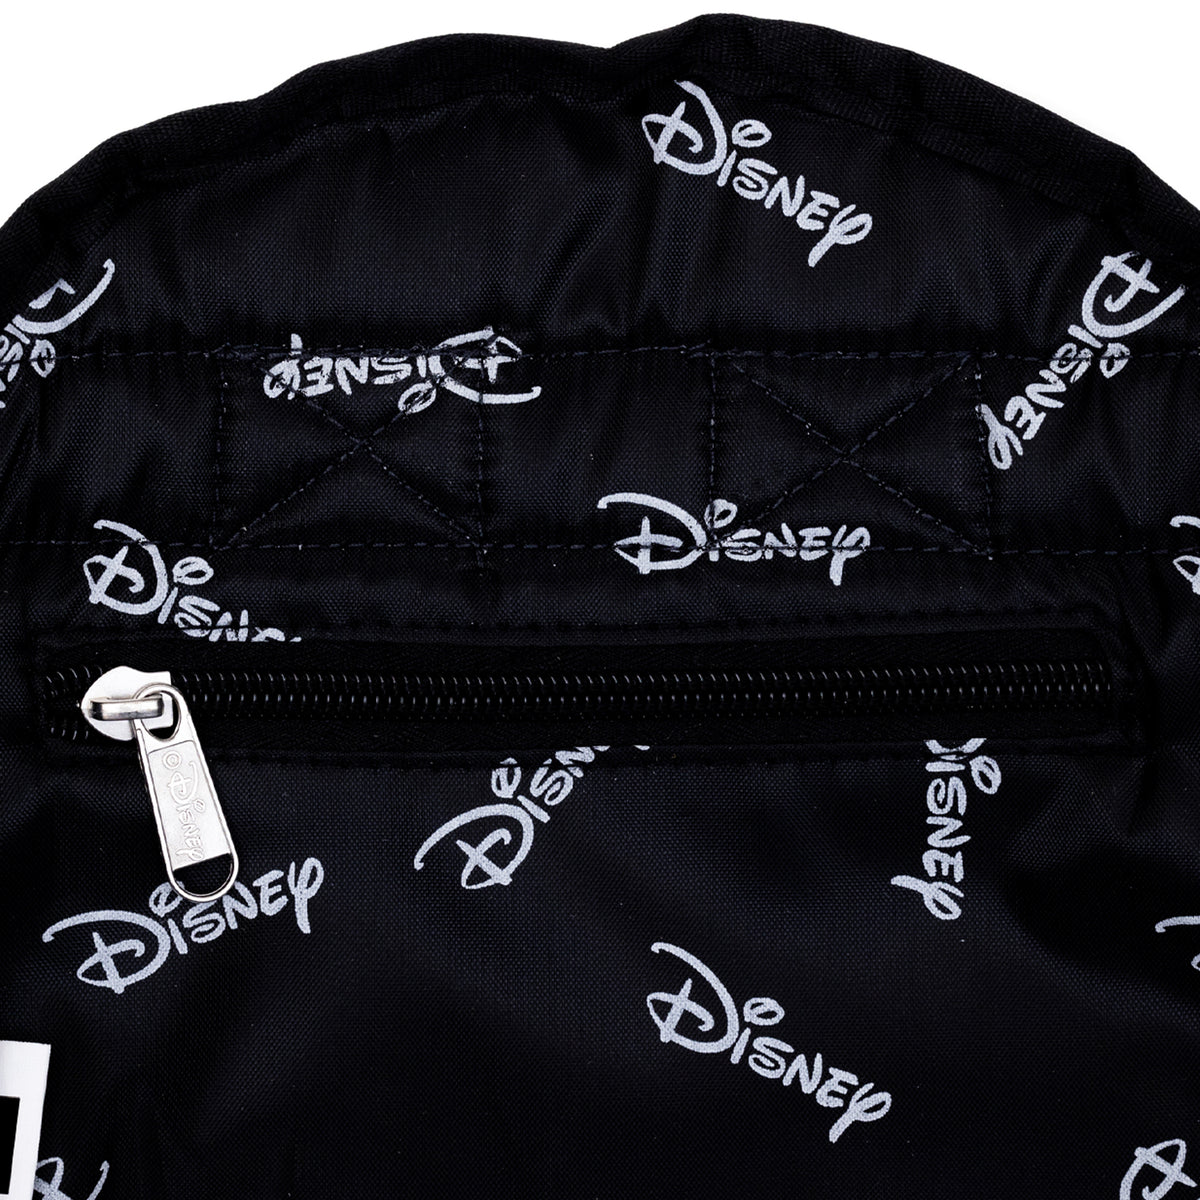 Disney Big Hero 6 Baymax Park Day Nylon Mini Backpack